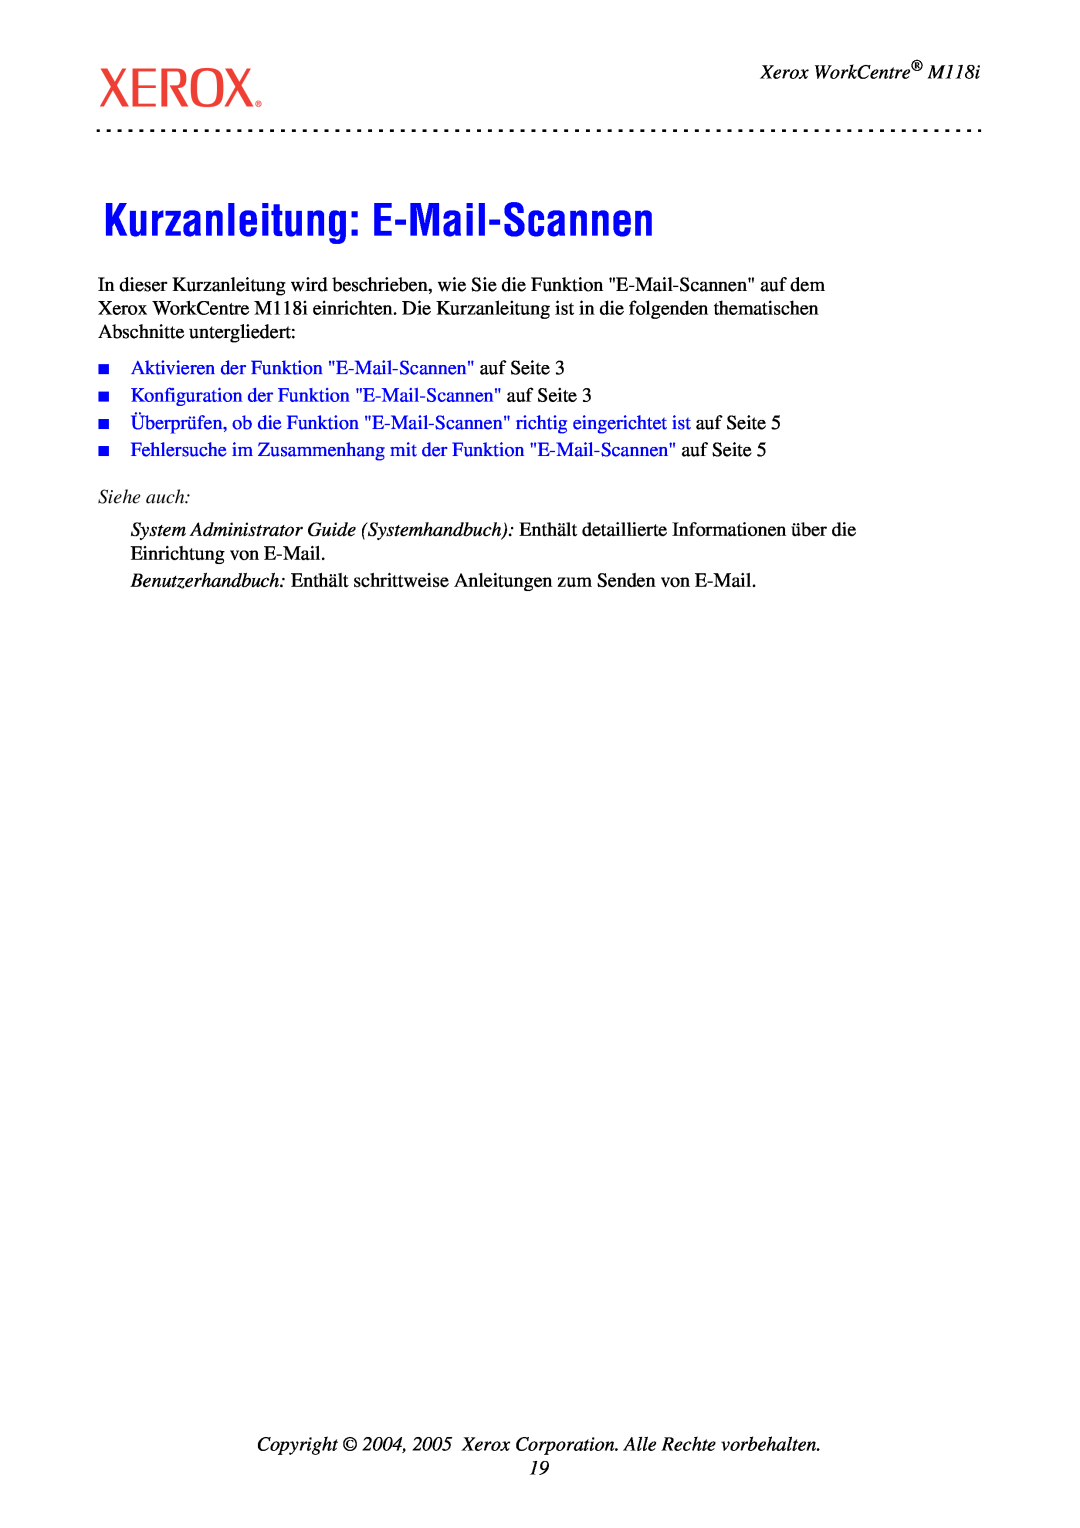 Xerox manual Kurzanleitung: E-Mail-Scannen, Xerox WorkCentre M118i, Aktivieren der Funktion E-Mail-Scannen auf Seite 